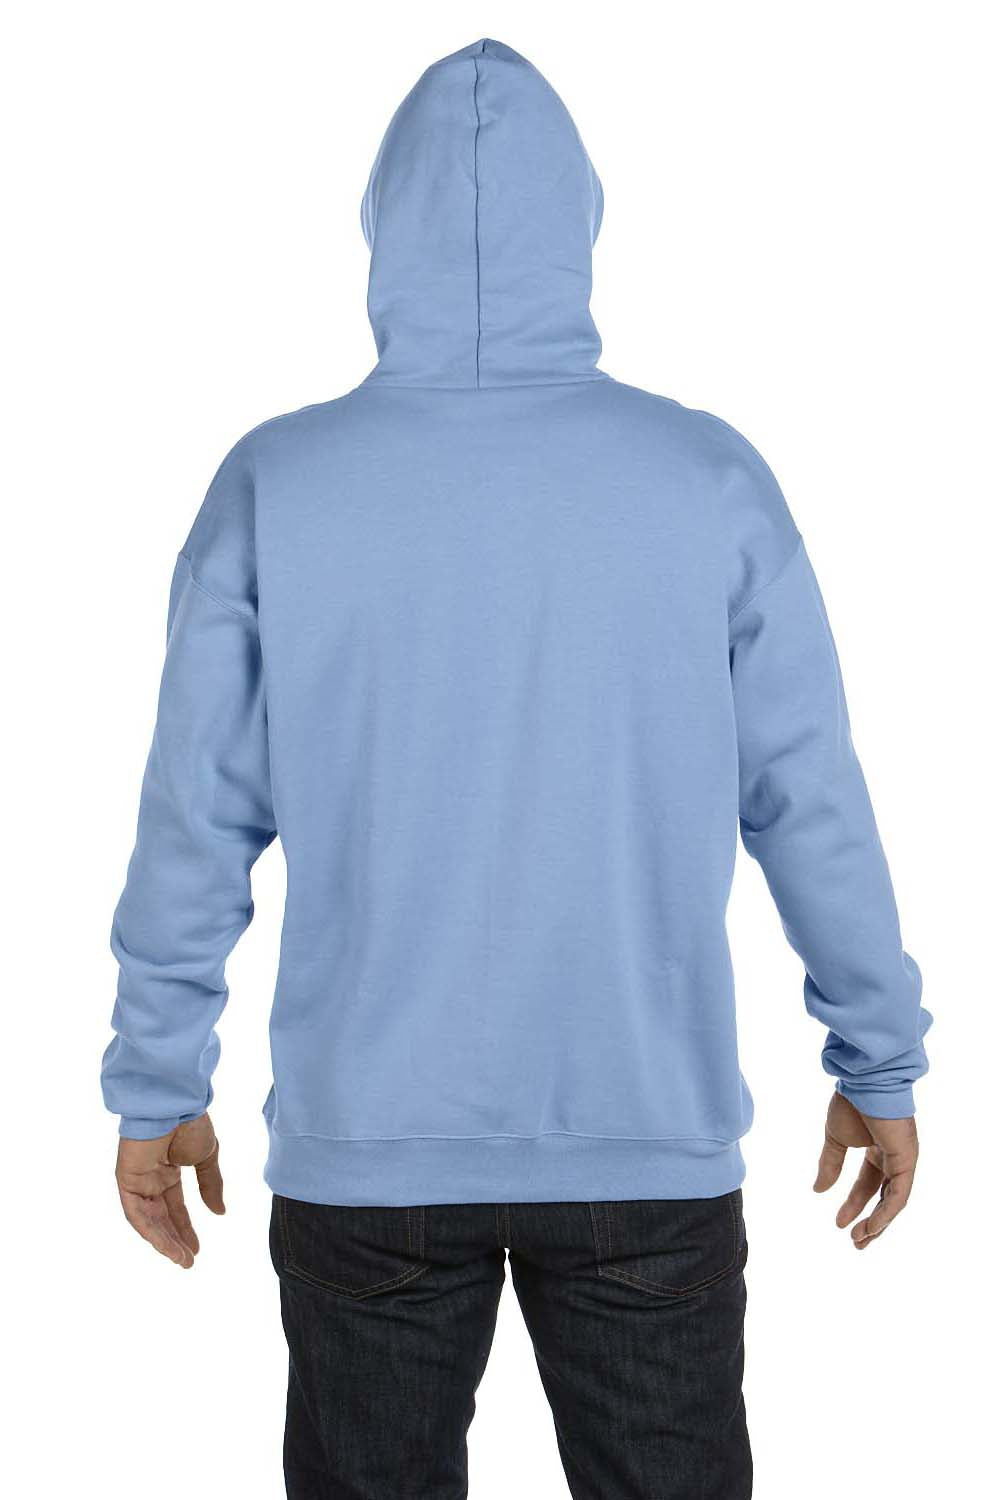 Hanes F170 Mens Ultimate Cotton PrintPro XP Hooded Sweatshirt Hoodie Light Blue Back